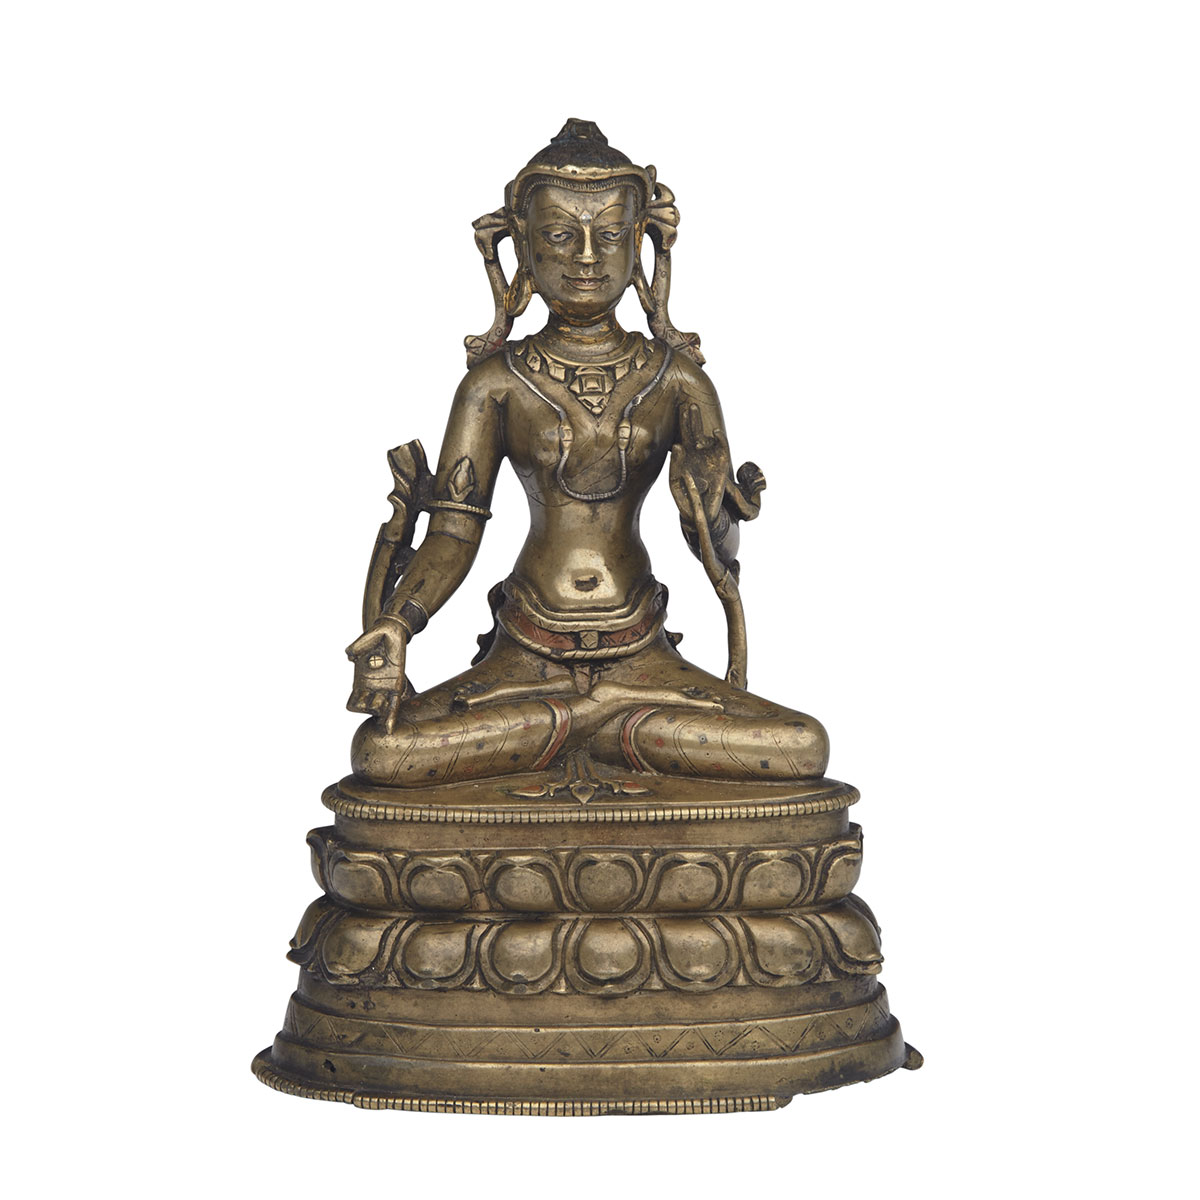 Rare Bronze Pala-Style Seated Figure of Tara, East India or Western Tibet, Circa 12th/13th Century